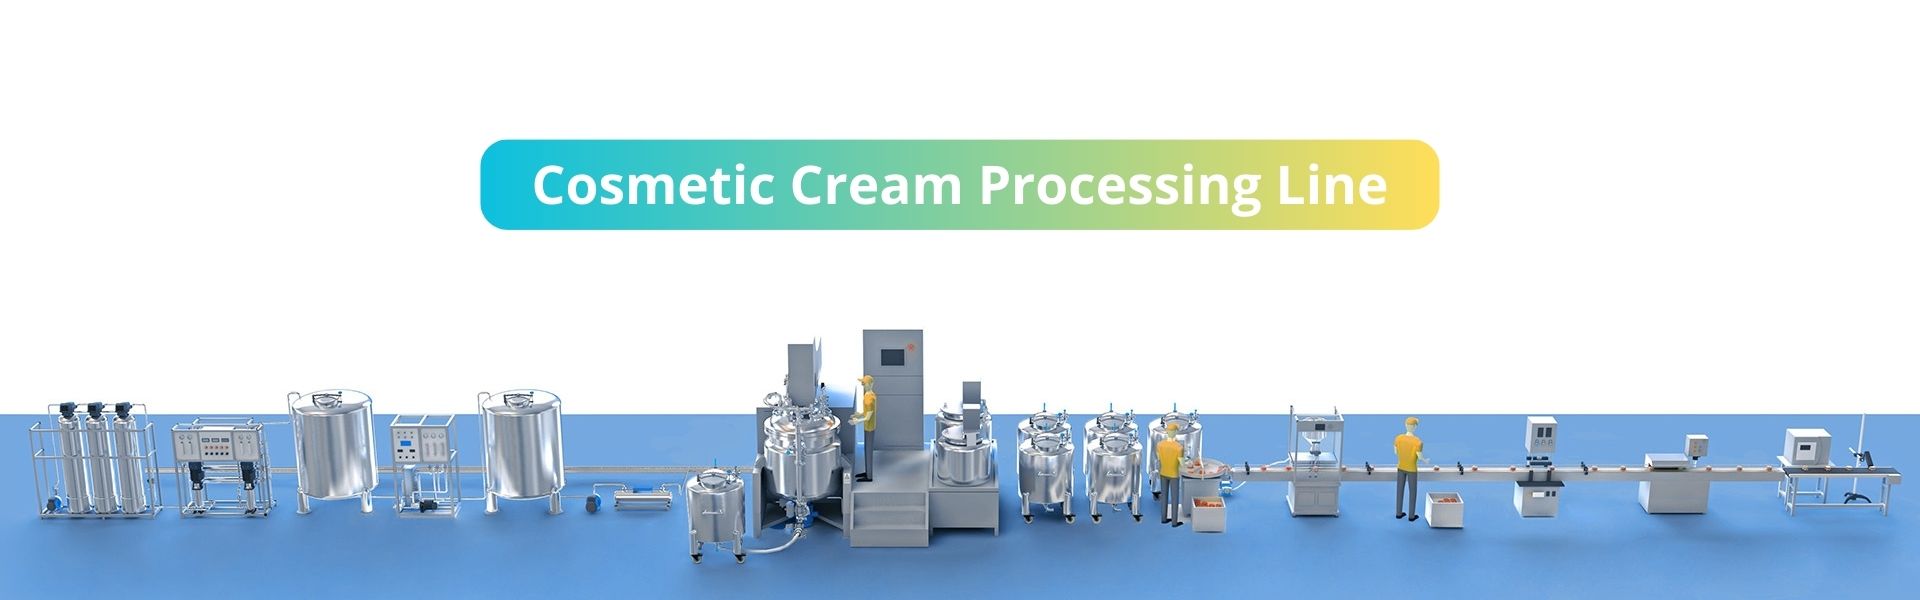 Cosmetic Cream Processing Line